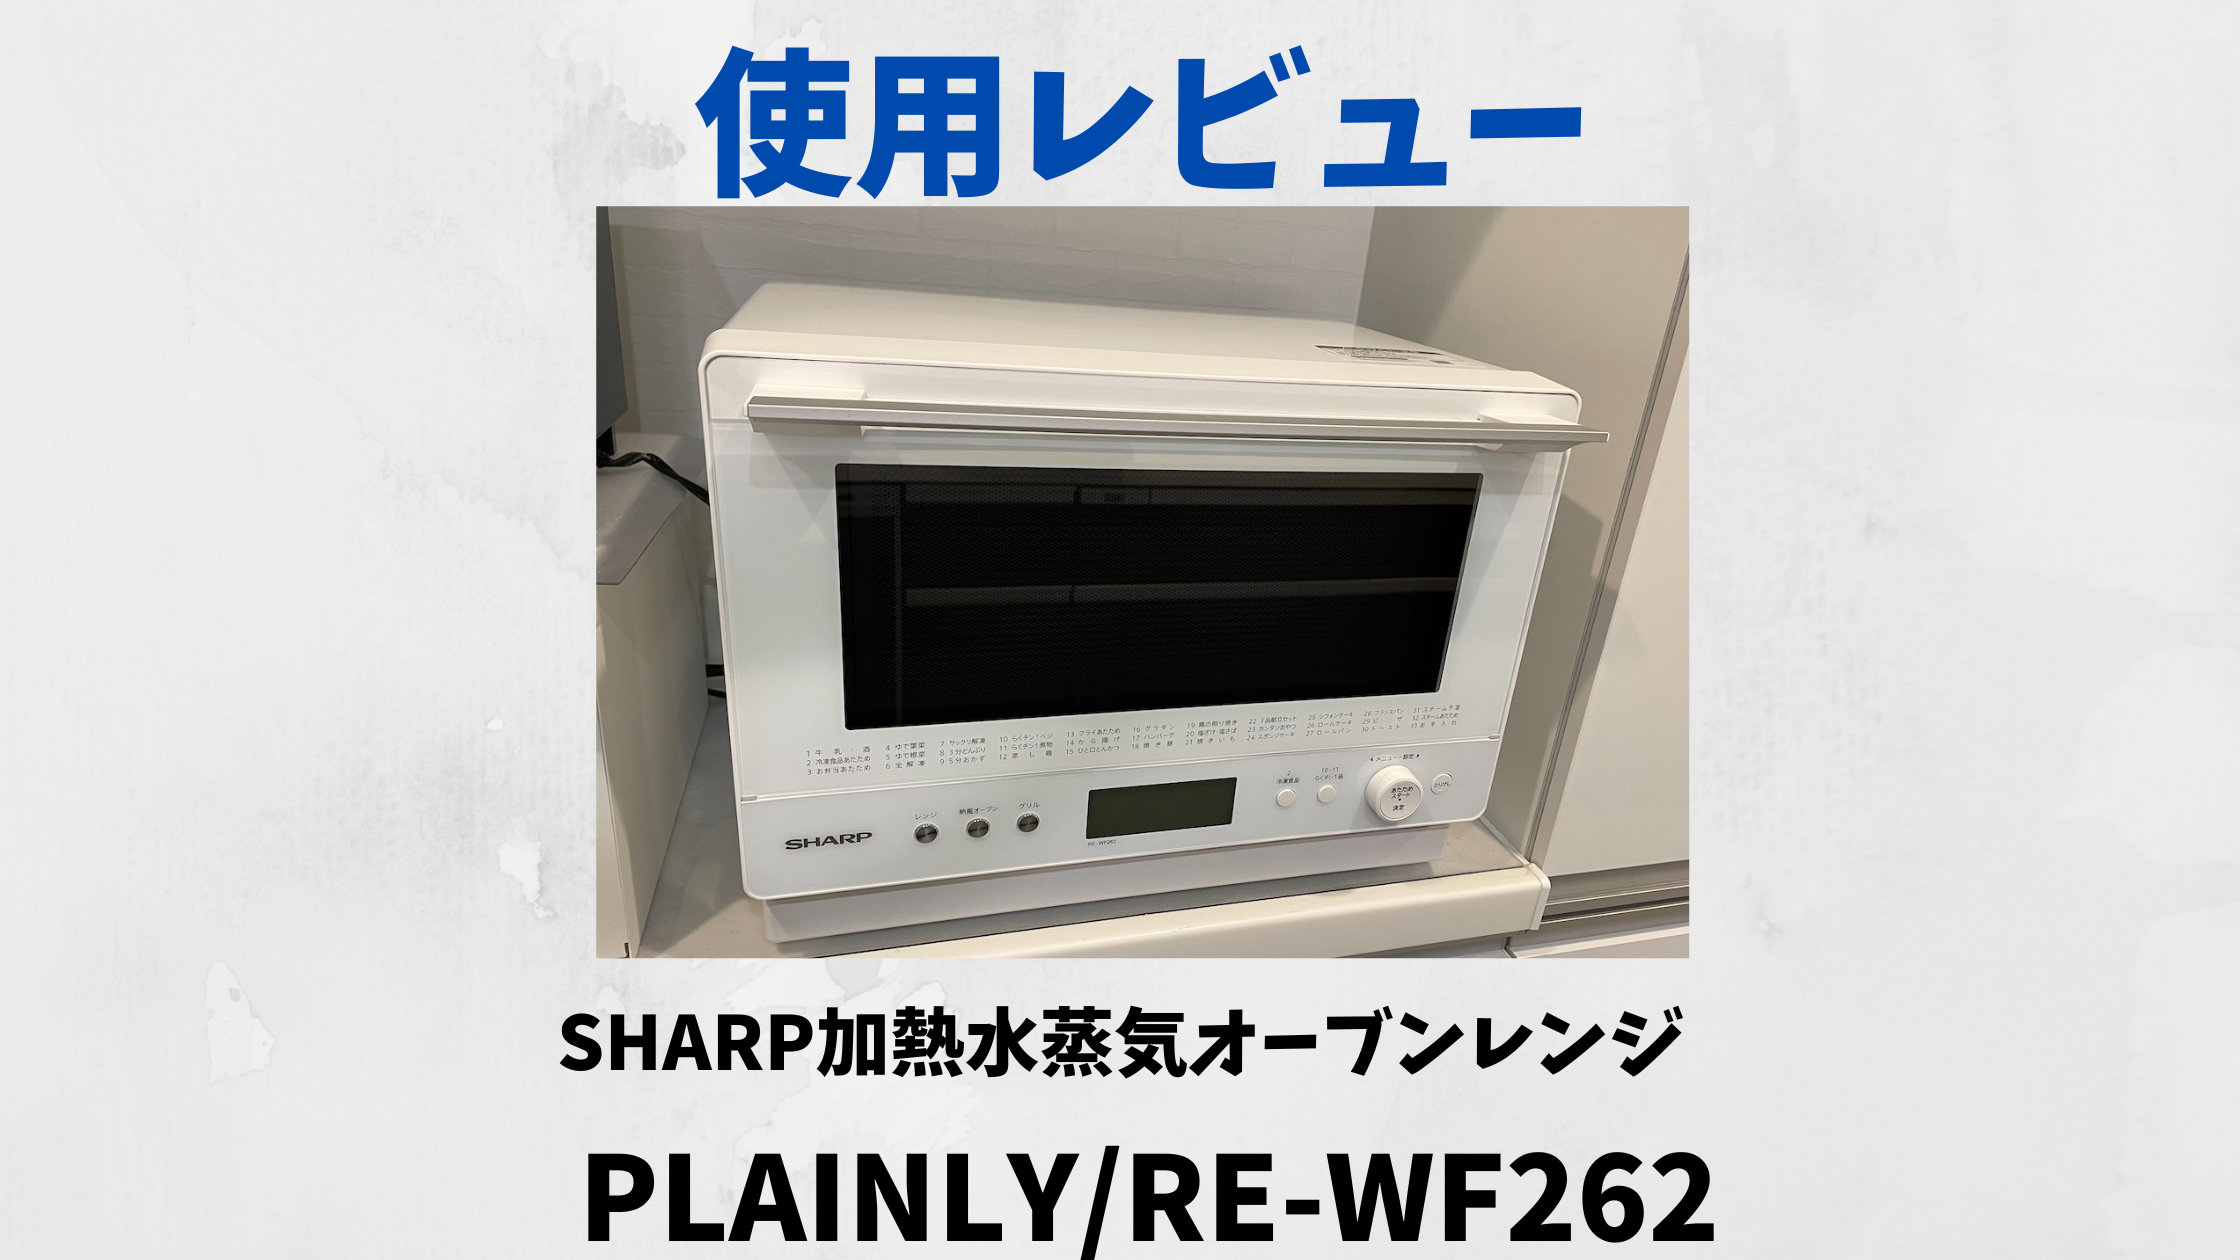 SHARP/RE-WF262レビュー